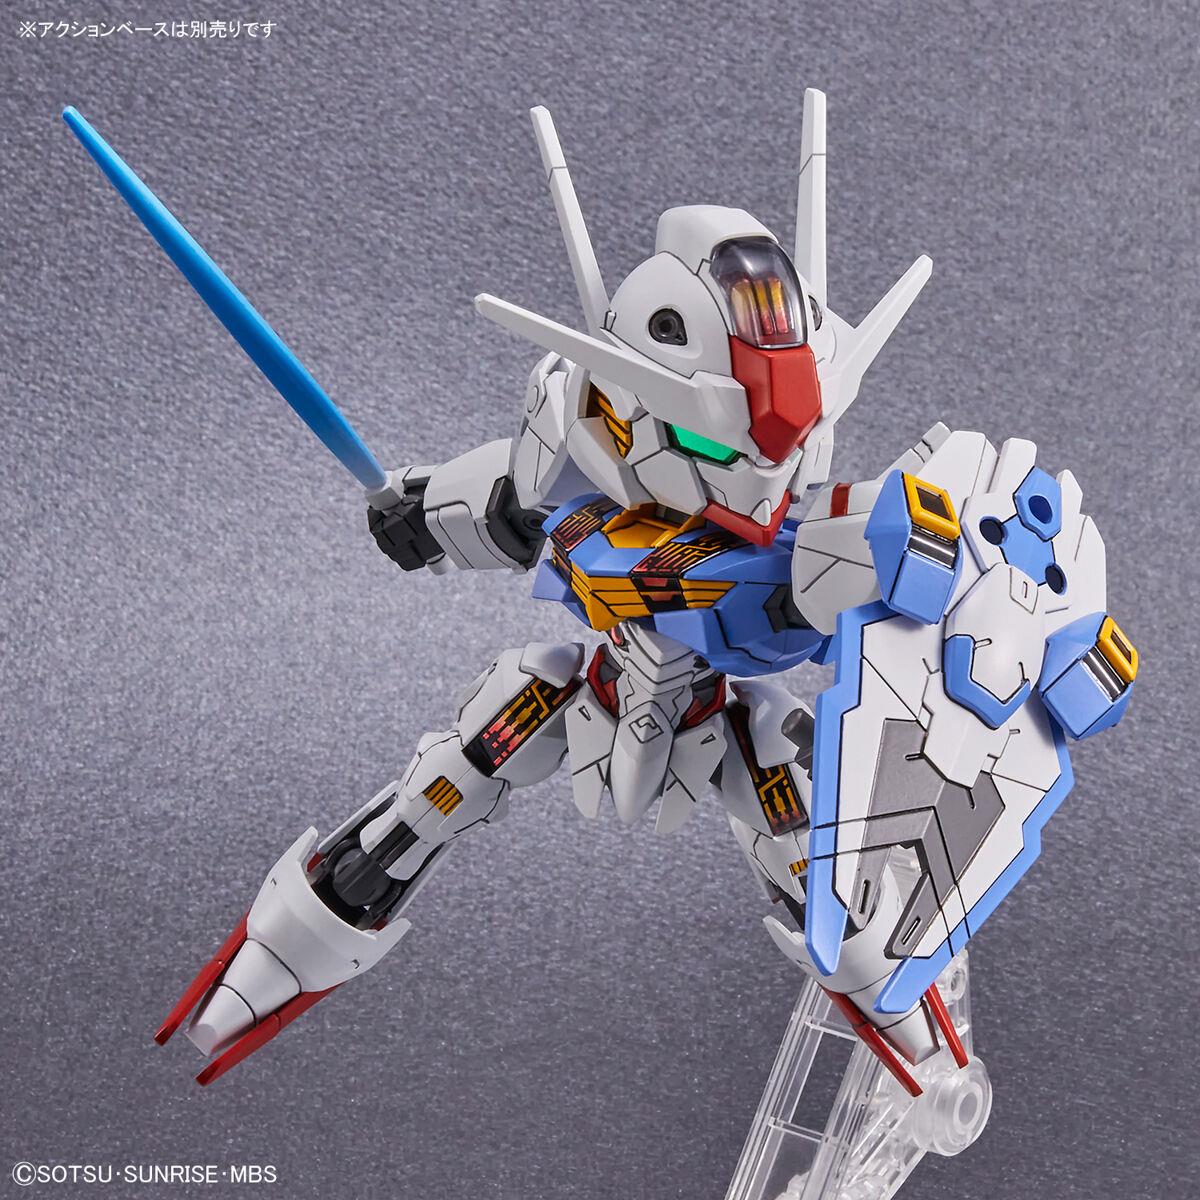 Gundam: Gundam Aerial SD Model